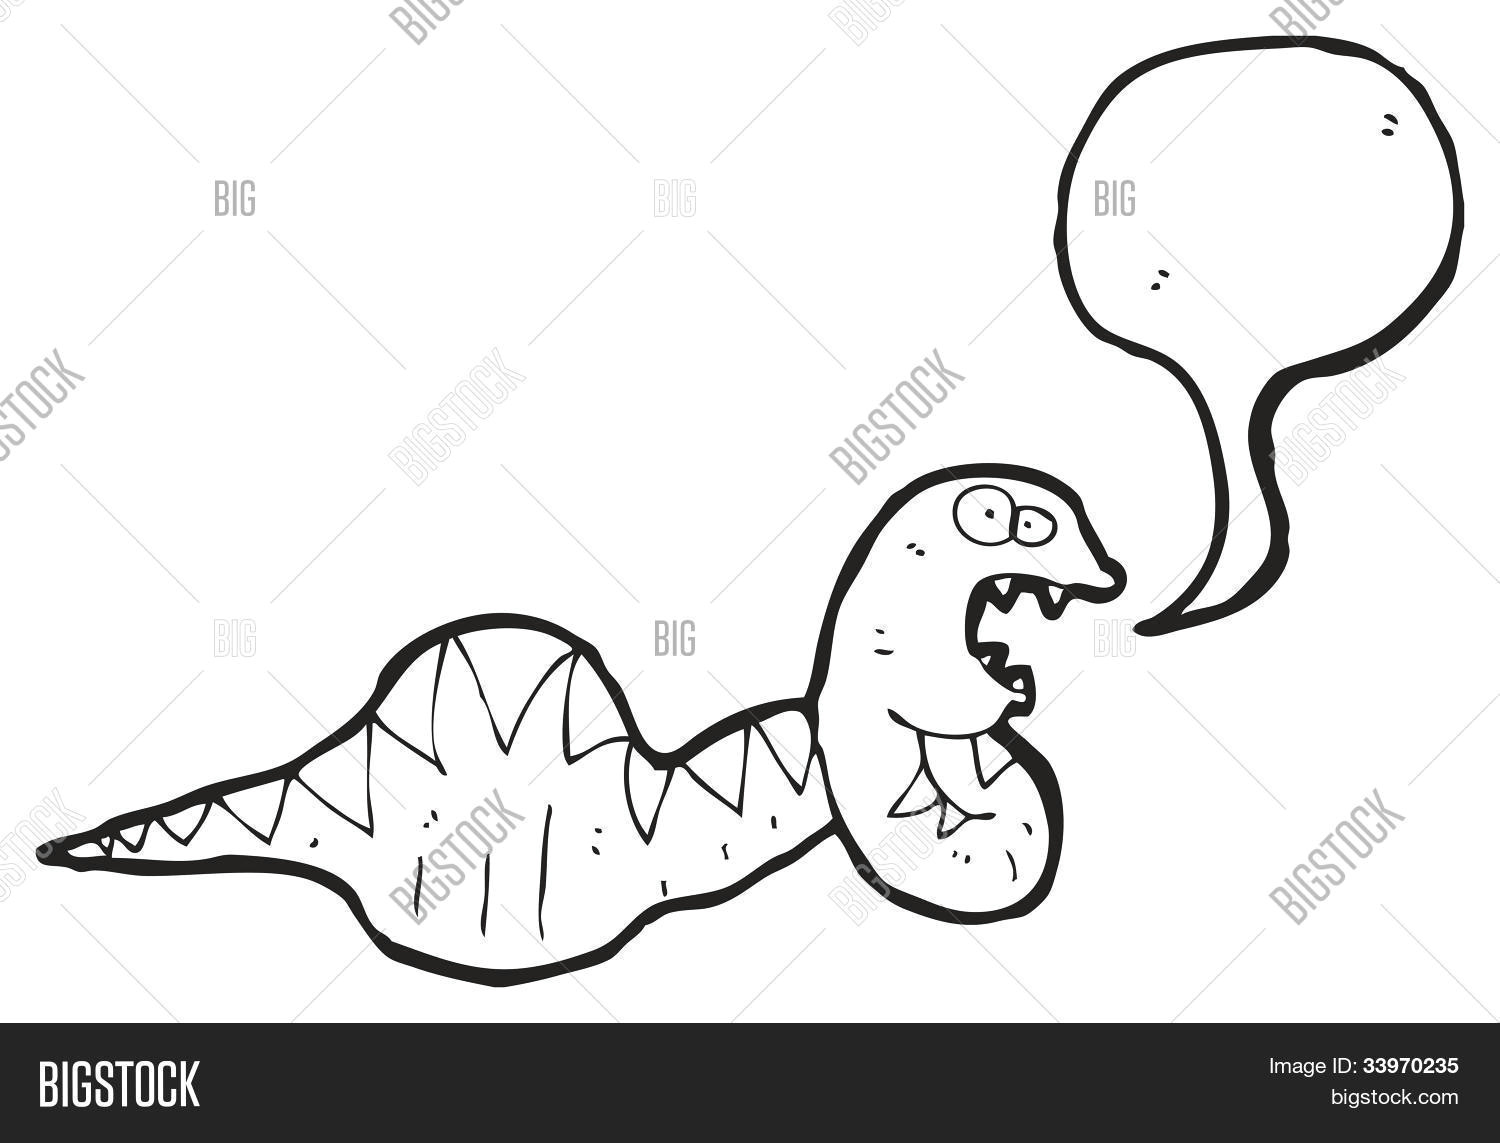 Cartoon Drawing Snake Cartoon Snake Big Image Photo Free Trial Bigstock